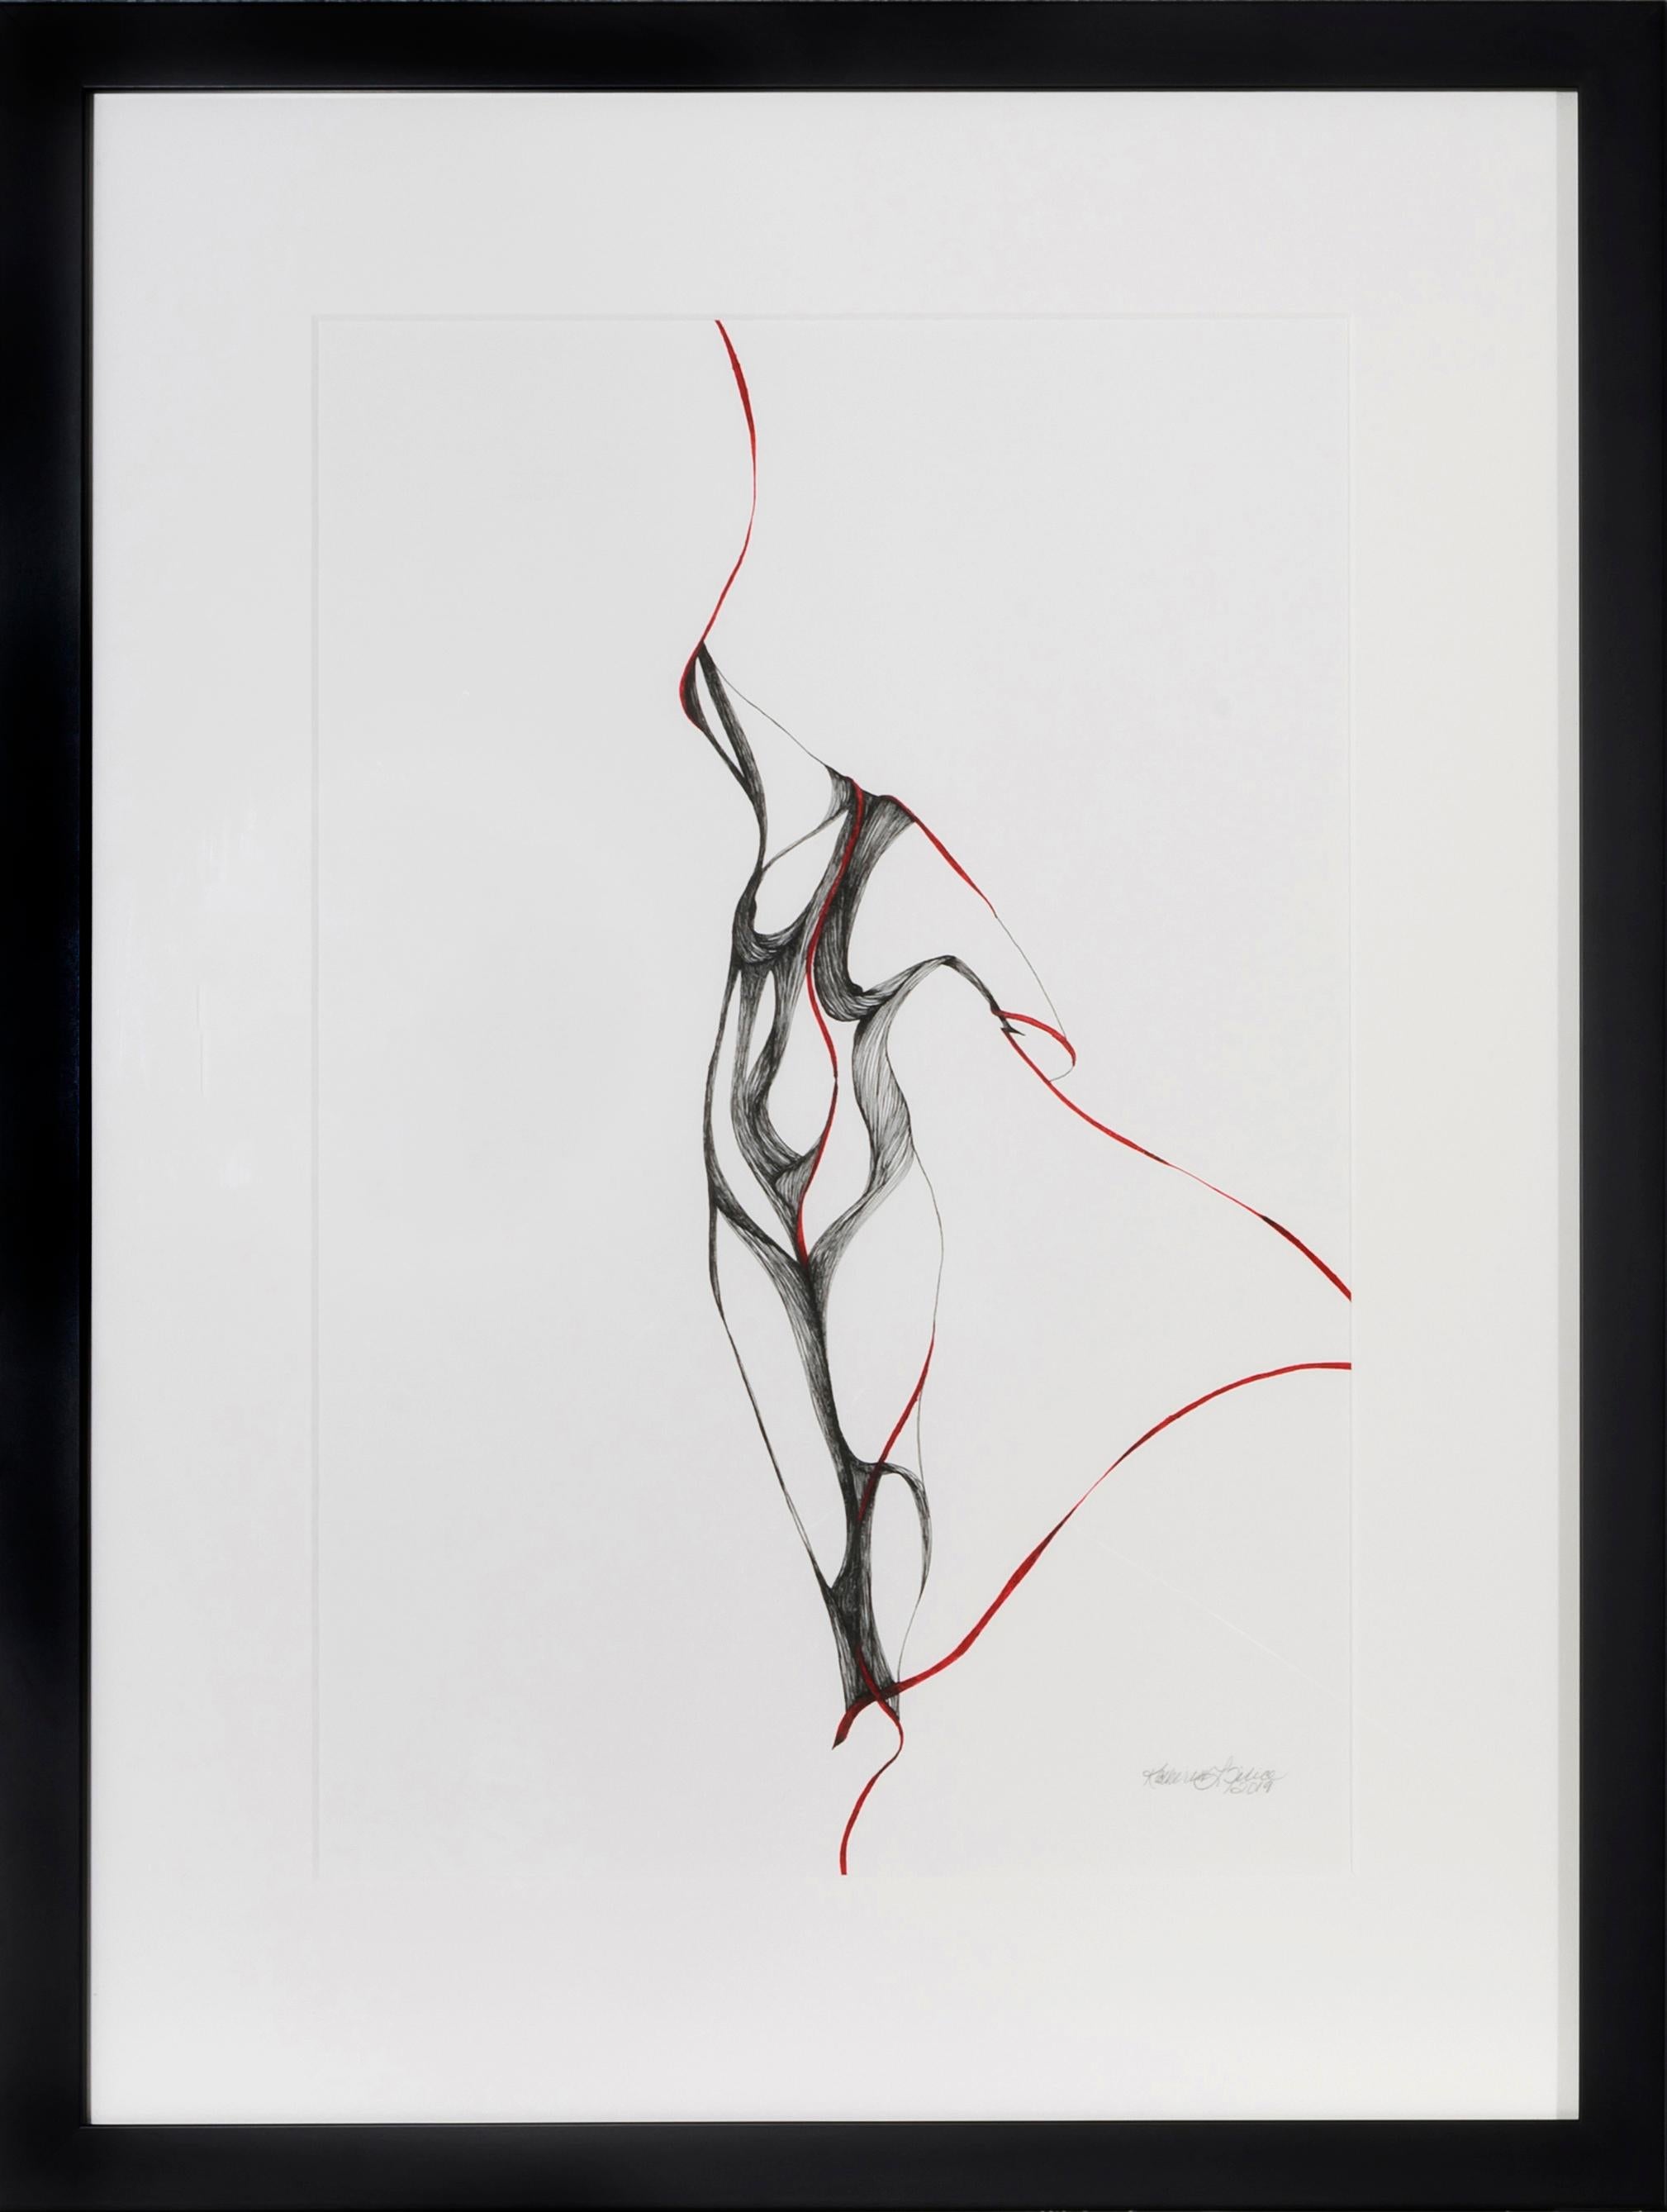 Figurative Art Katherine Filice - Pose trois Étude III - Dessin figuratif en noir, blanc et rouge